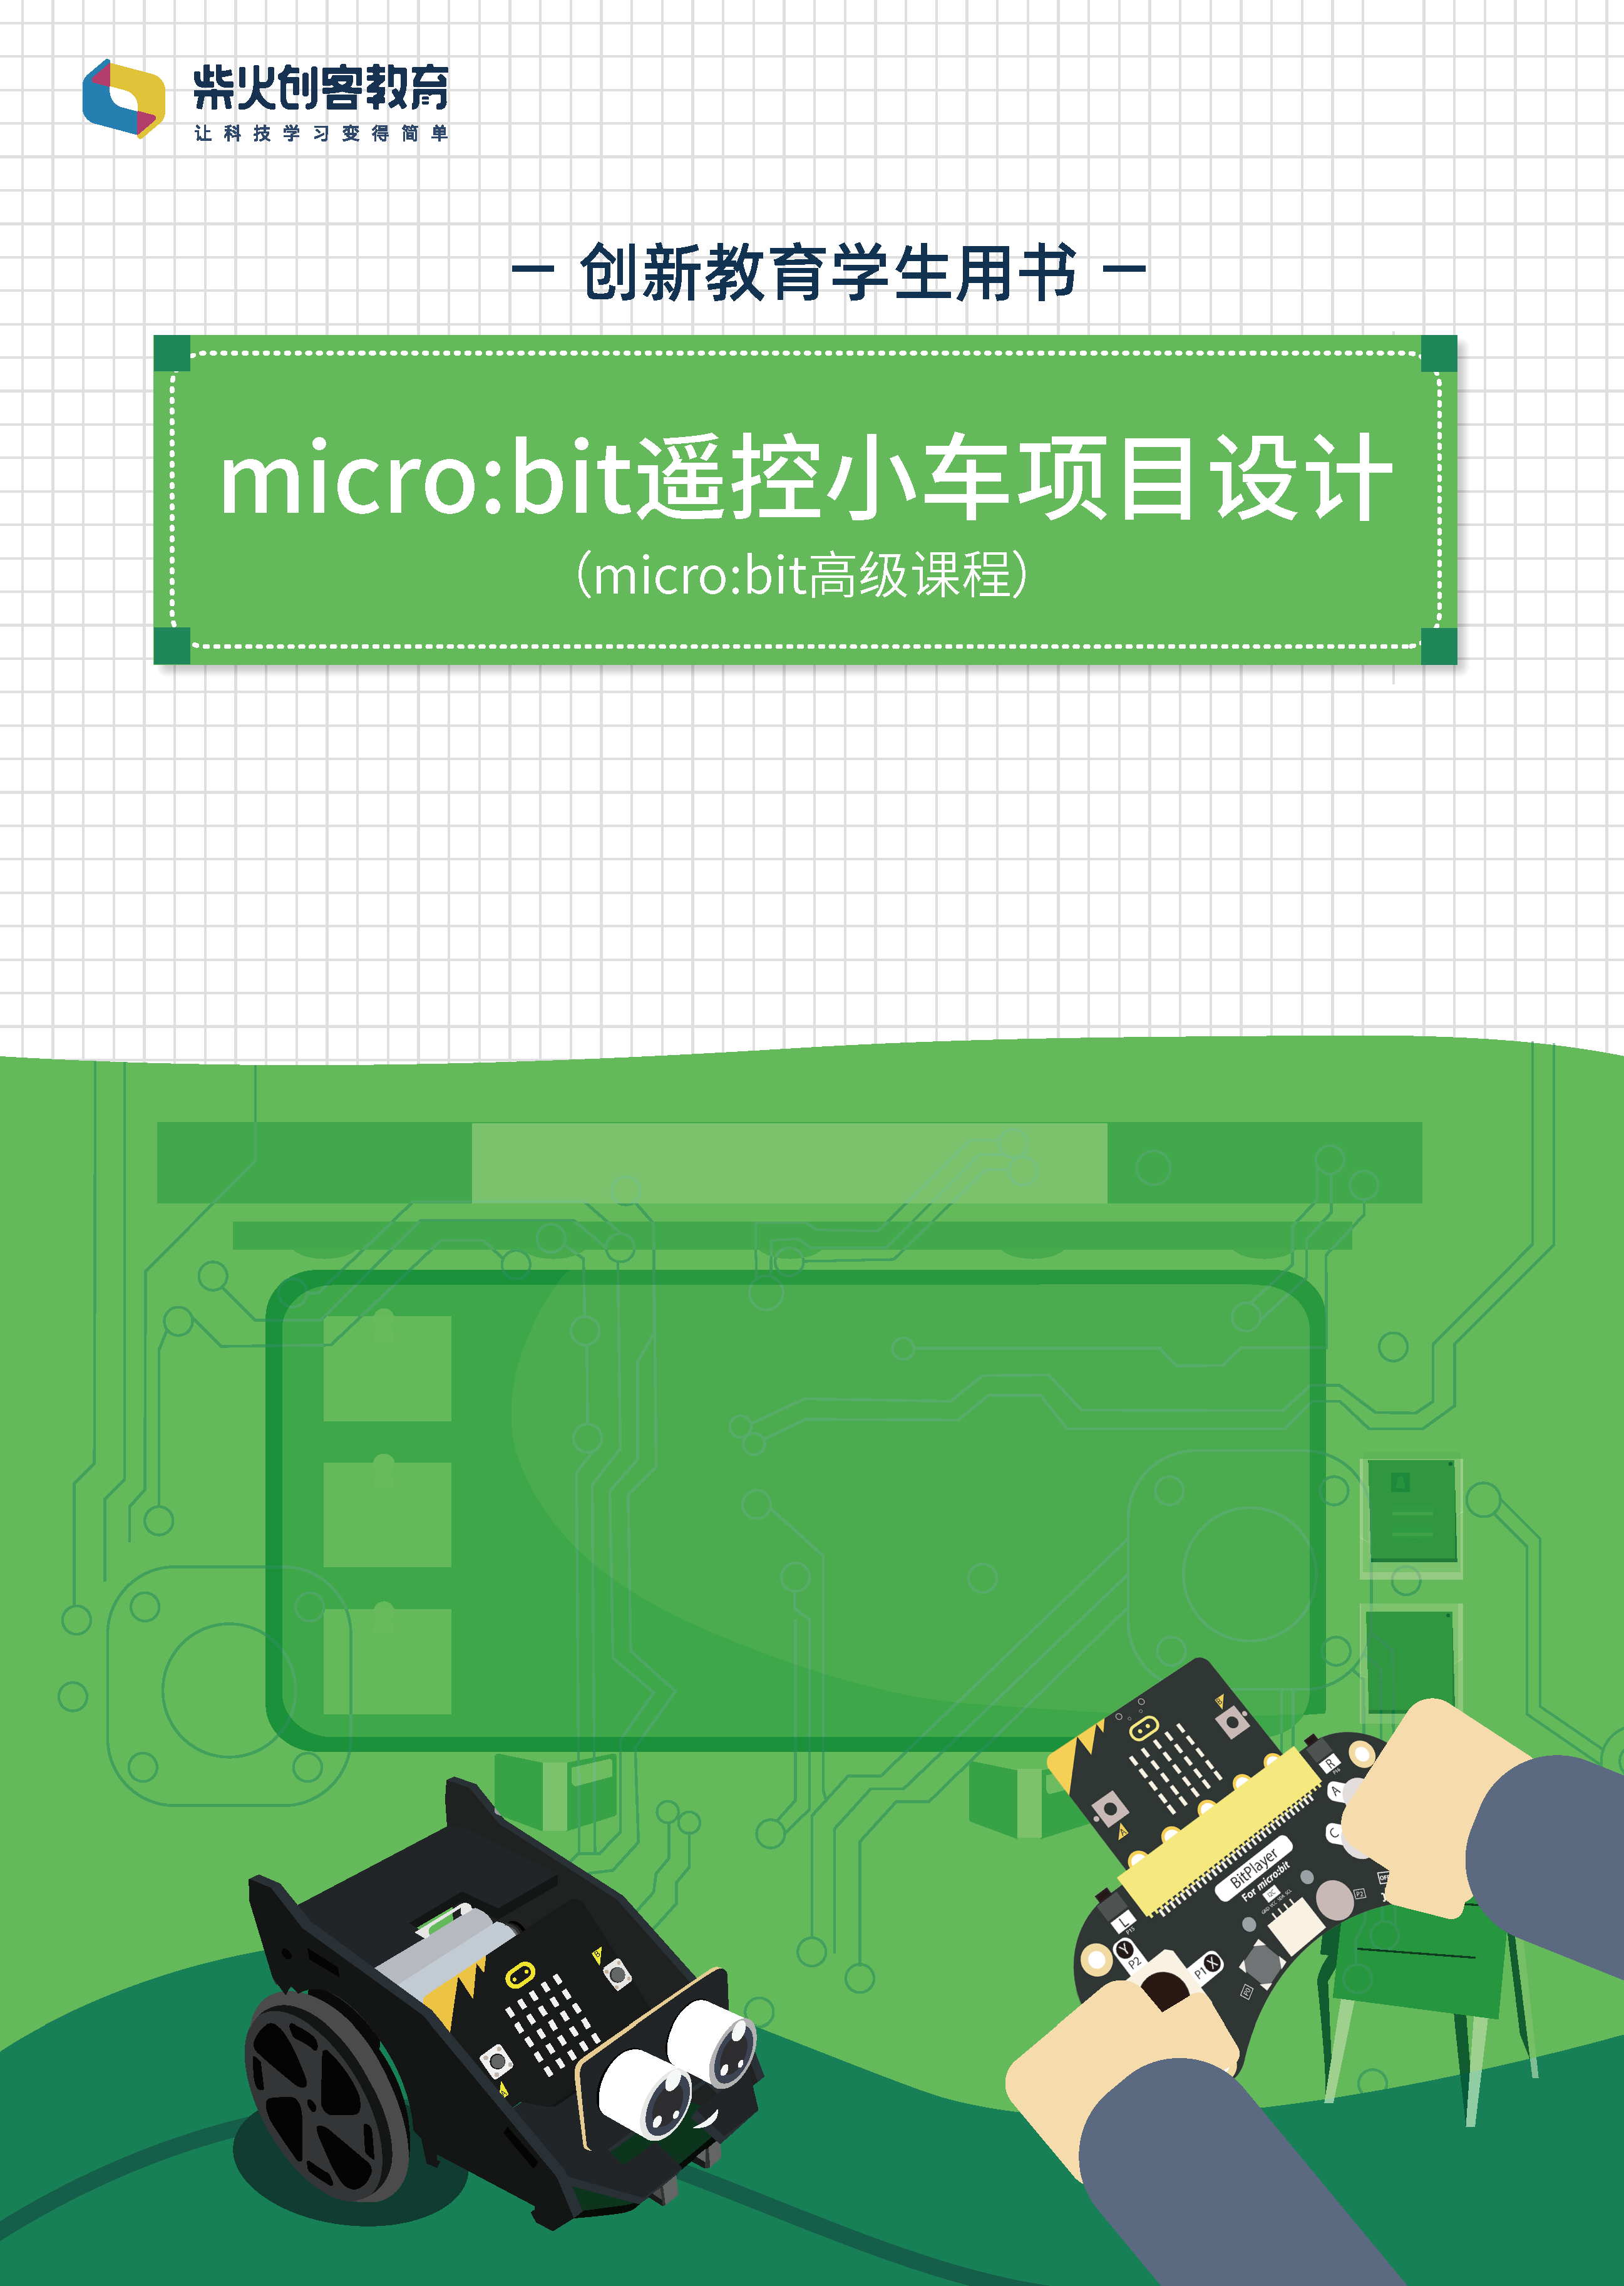 microbit-高级课程书籍封面-1_页面_1